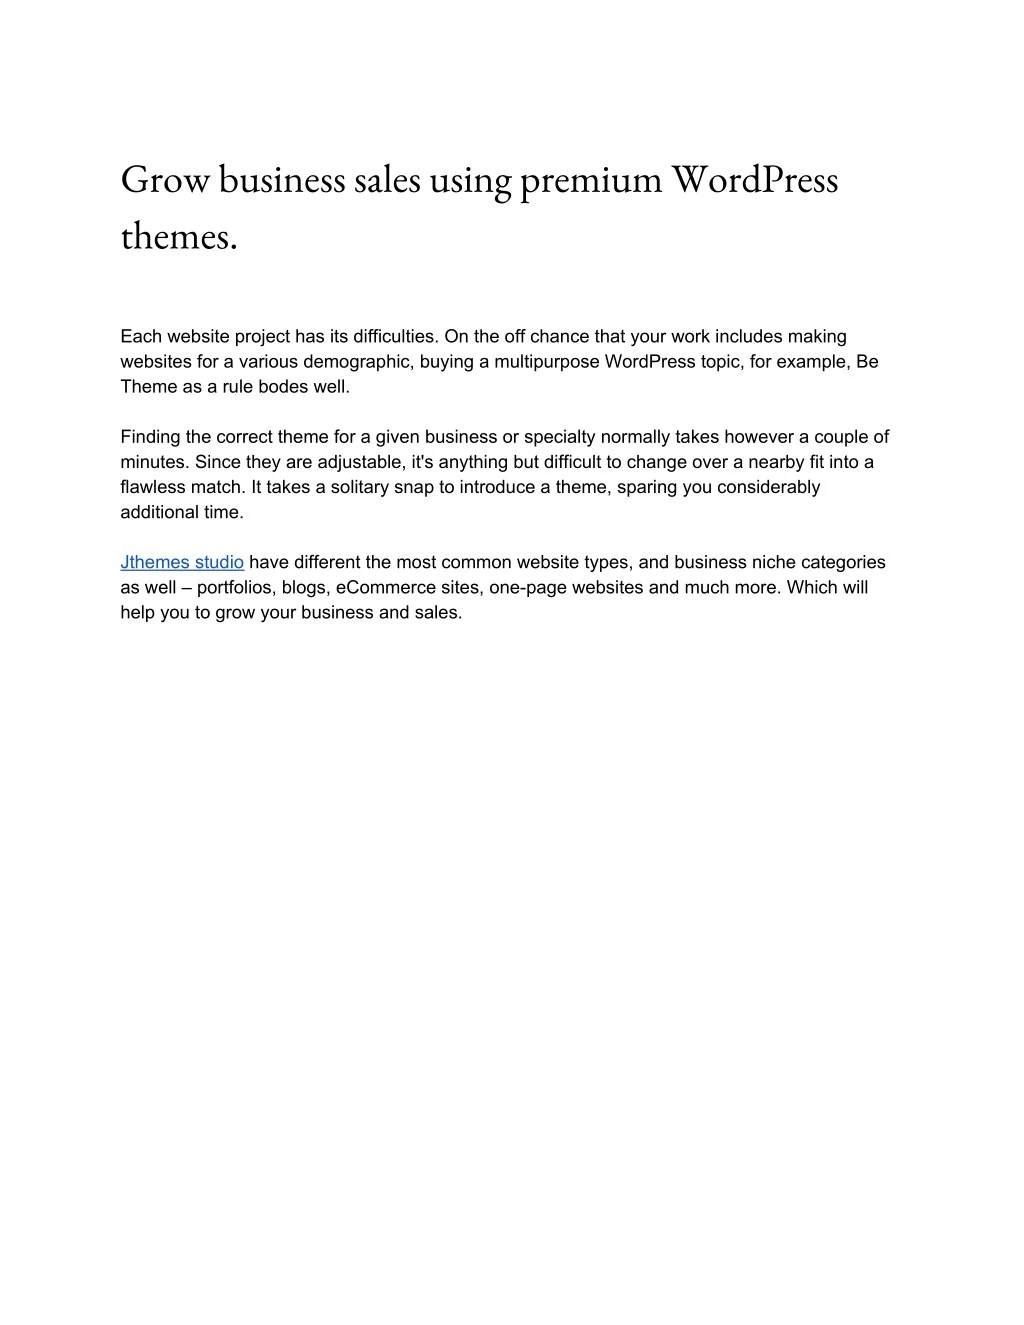 grow business sales using premium wordpress themes